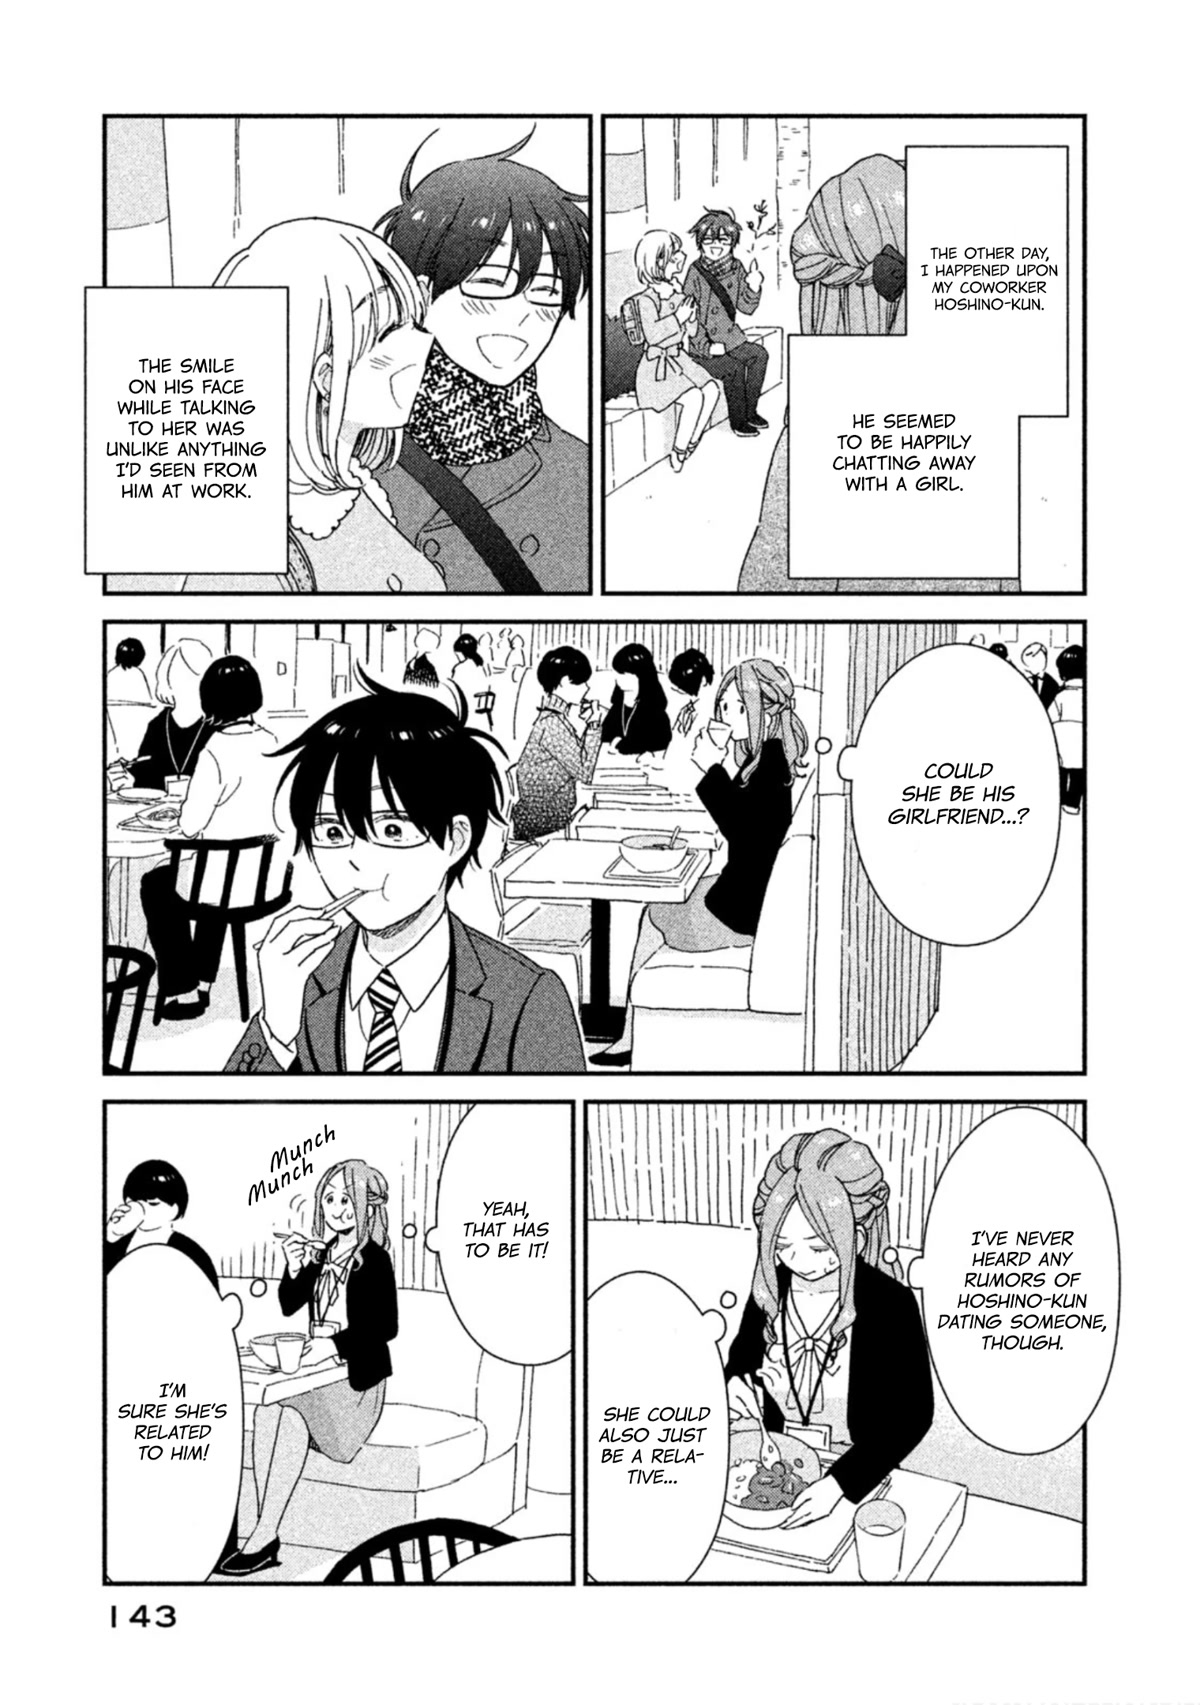 Rental Girlfriend Tsukita-San - Page 1